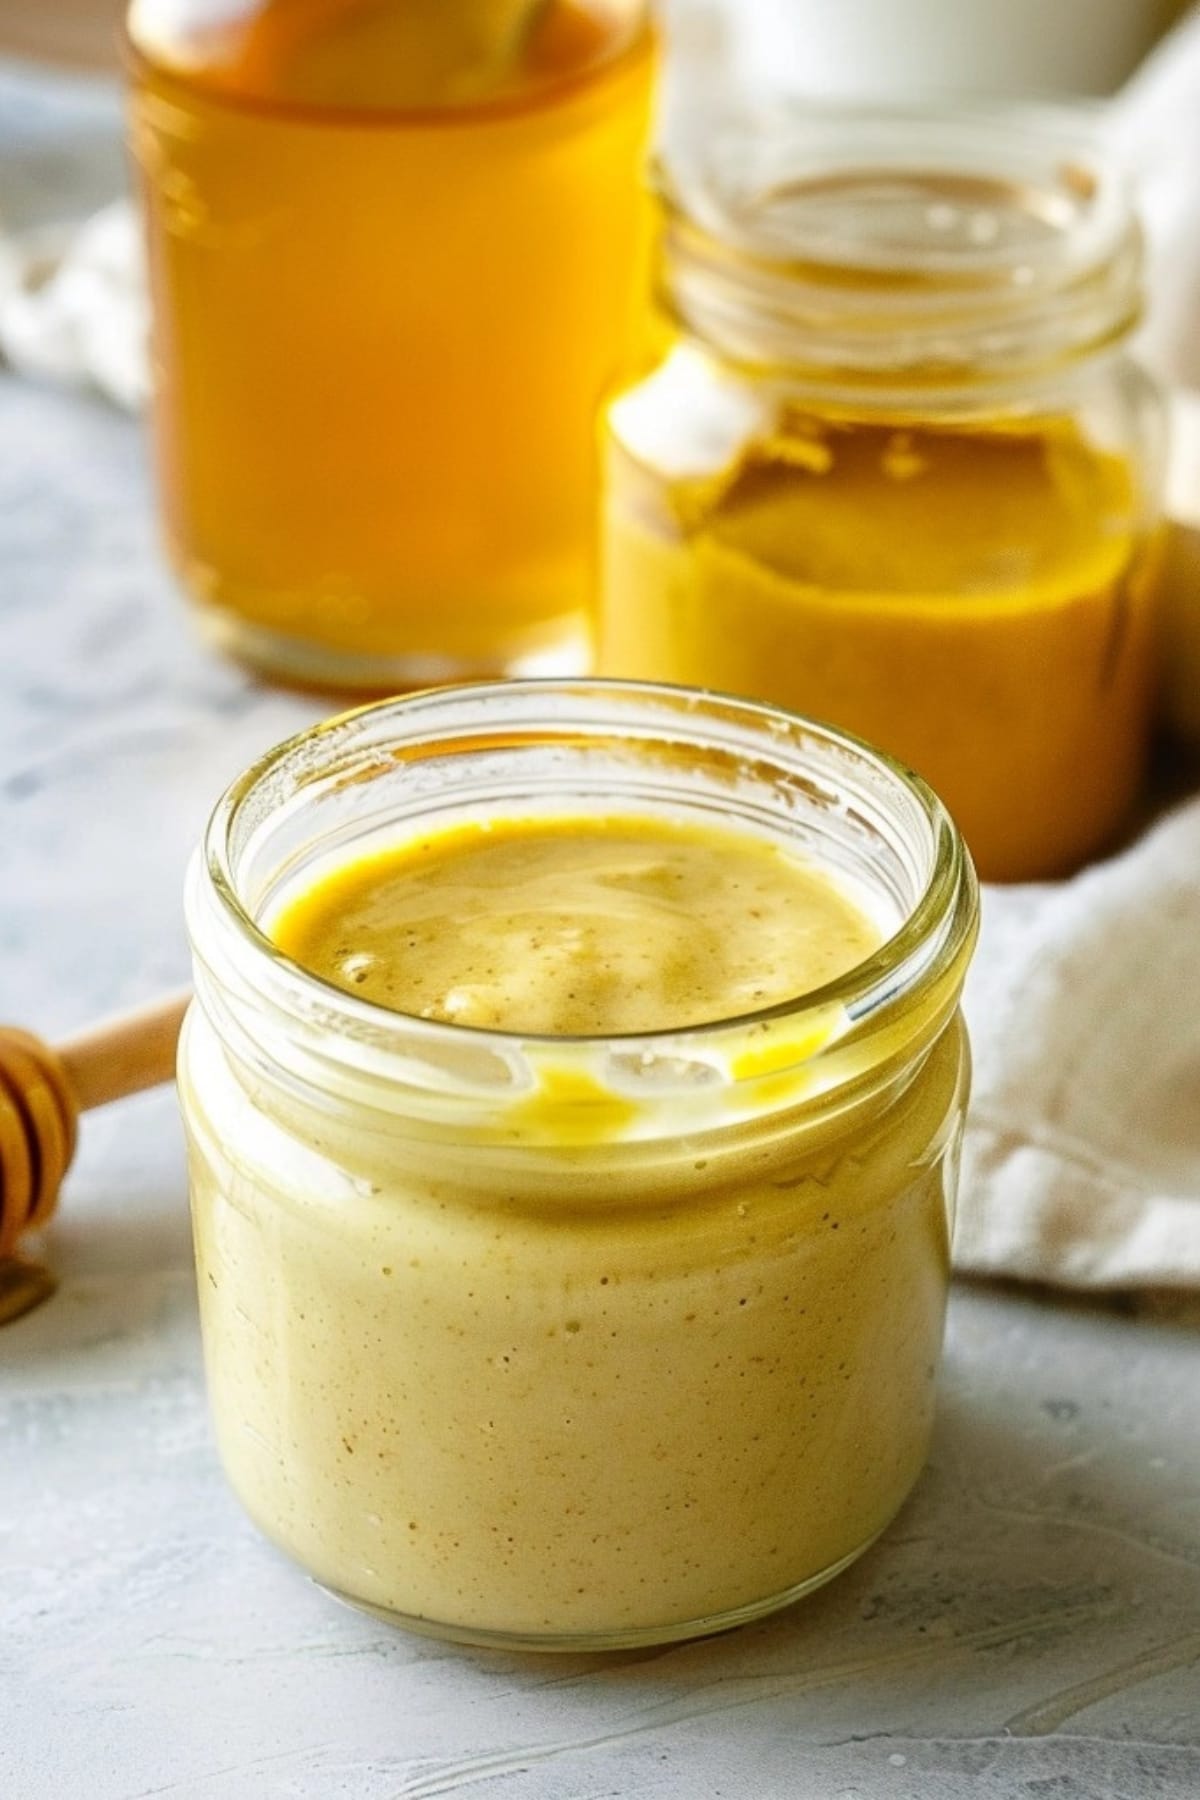 Honey mustard sauce in a small glass jar.